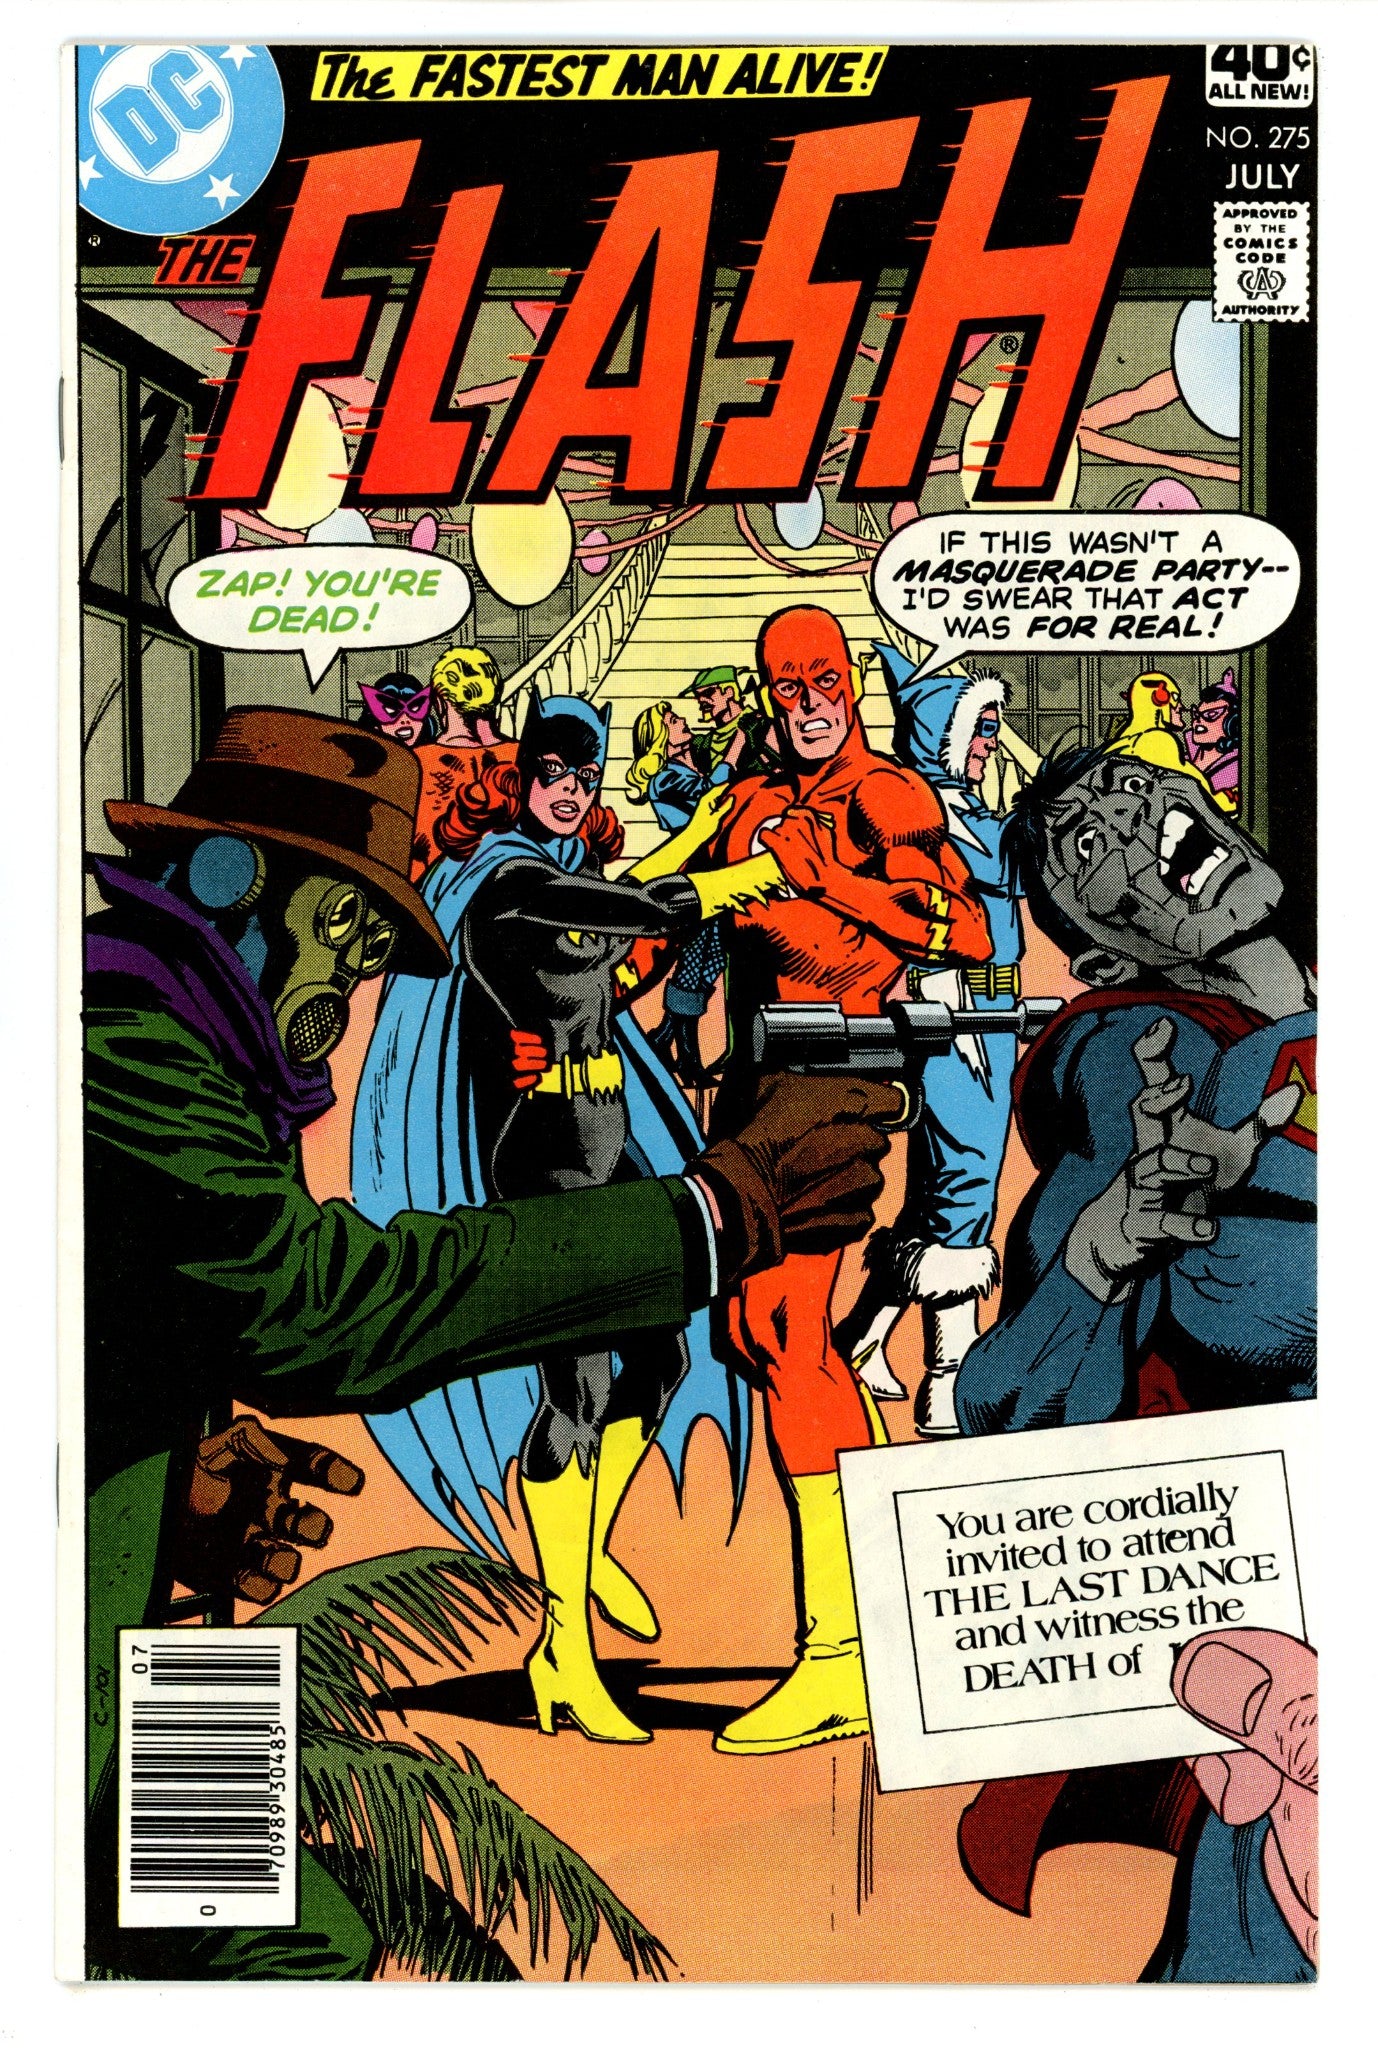 The Flash Vol 1 275 VF (8.0) (1979) 